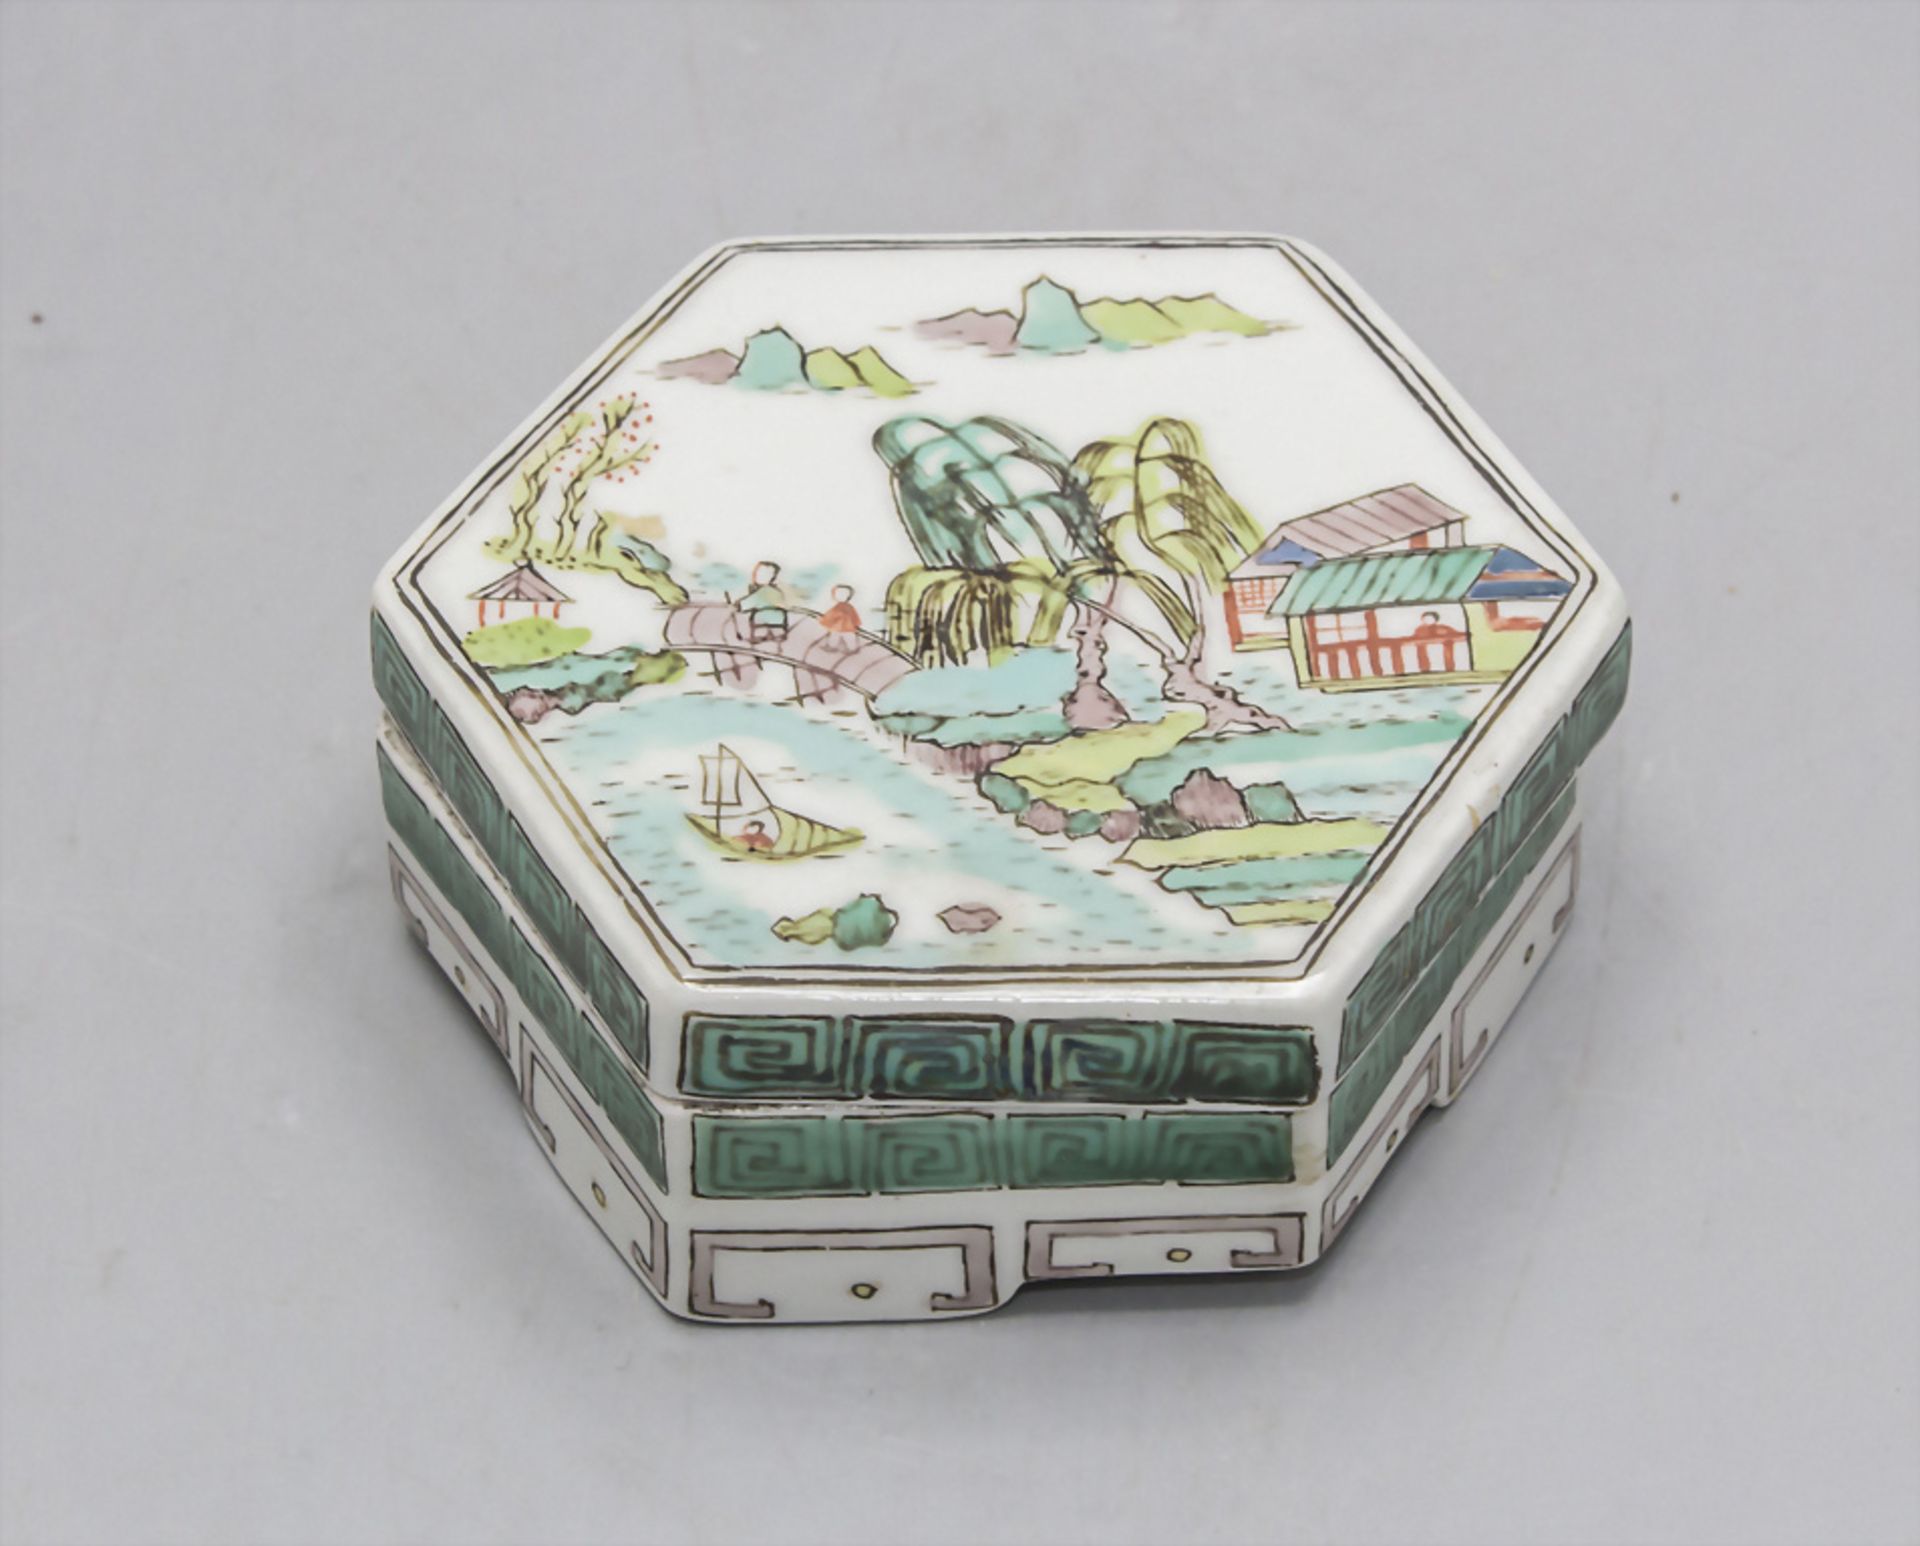 Deckeldose / A lidded porcelain box, China, Qing-Dynastie (1644-1911), 18./19. Jh.